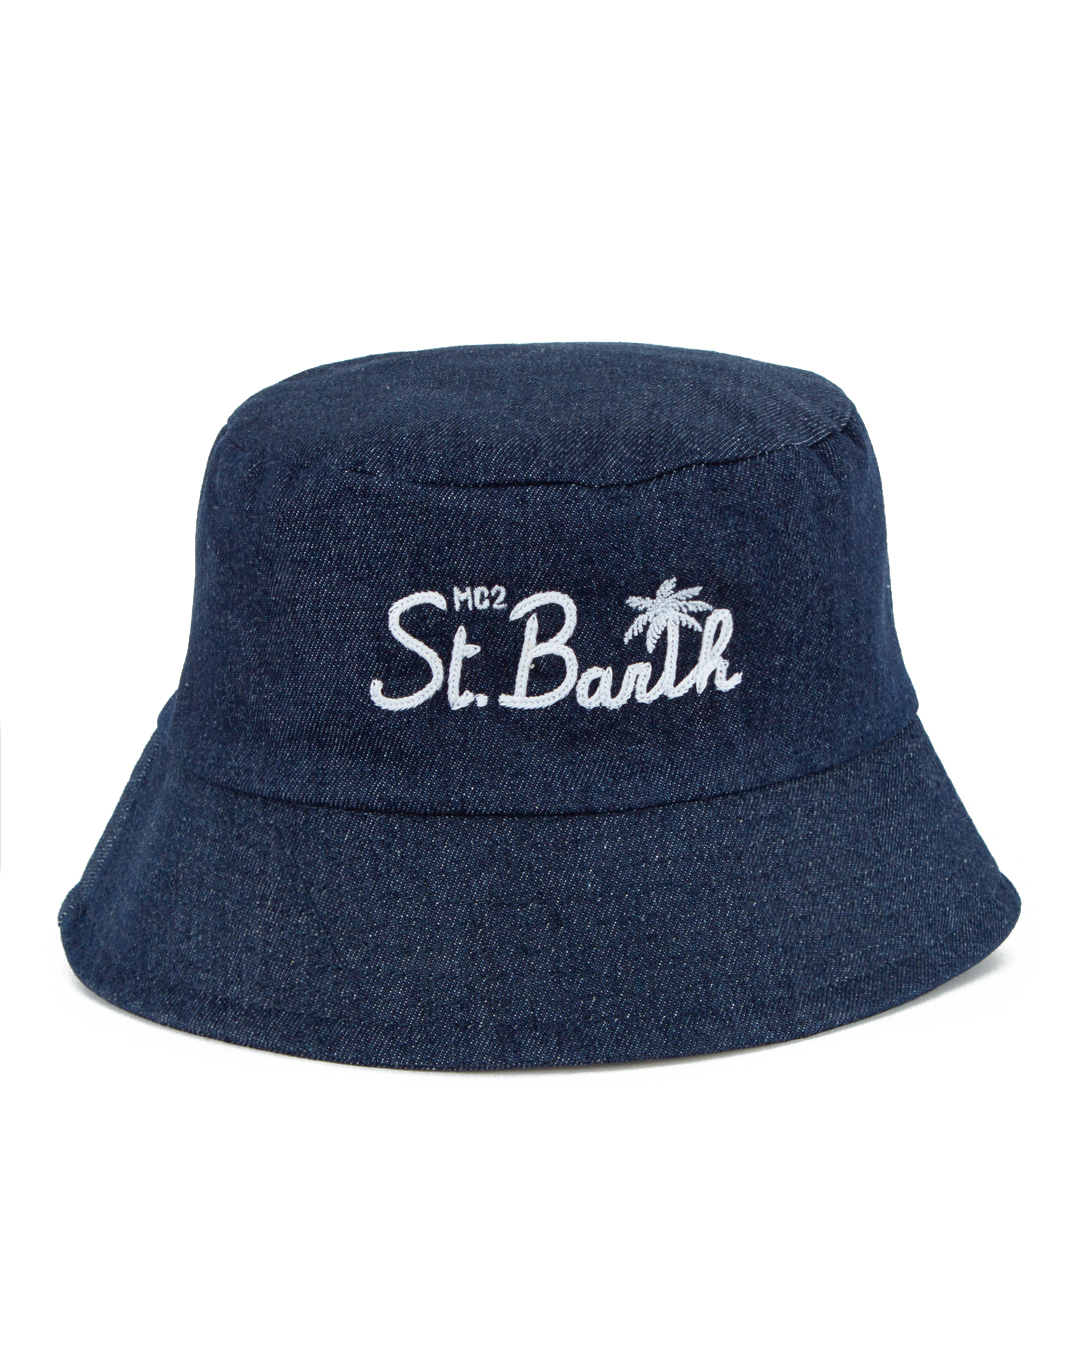 MC2 Saint Barth с вышивкой логотипа бренда  артикул JAMES DEN 1701 марки MC2 Saint Barth купить за 5300 руб.